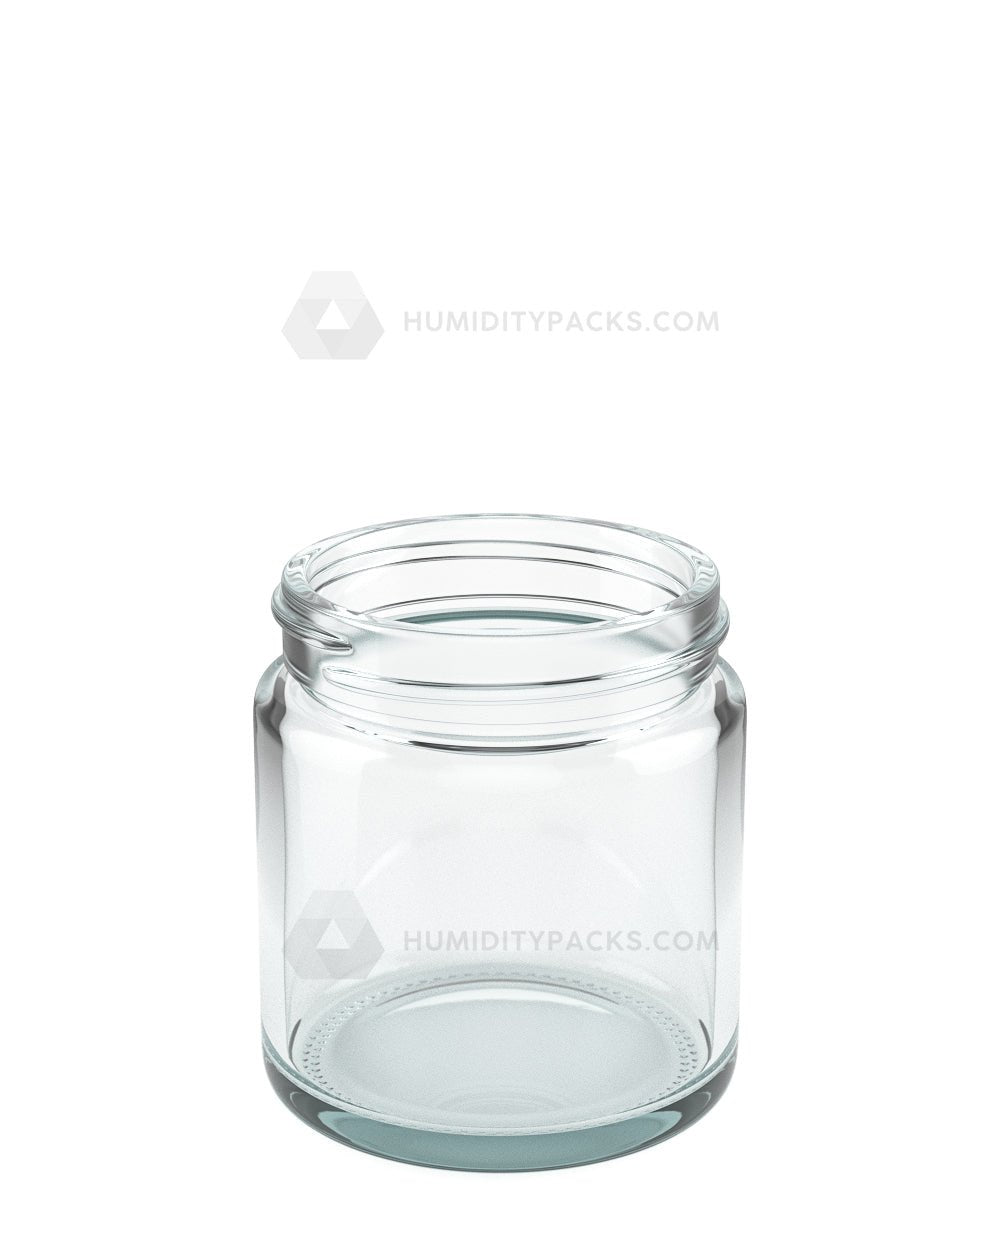 50mm Straight Sided Clear 3oz Glass Jar 150/Box Humidity Packs - 2